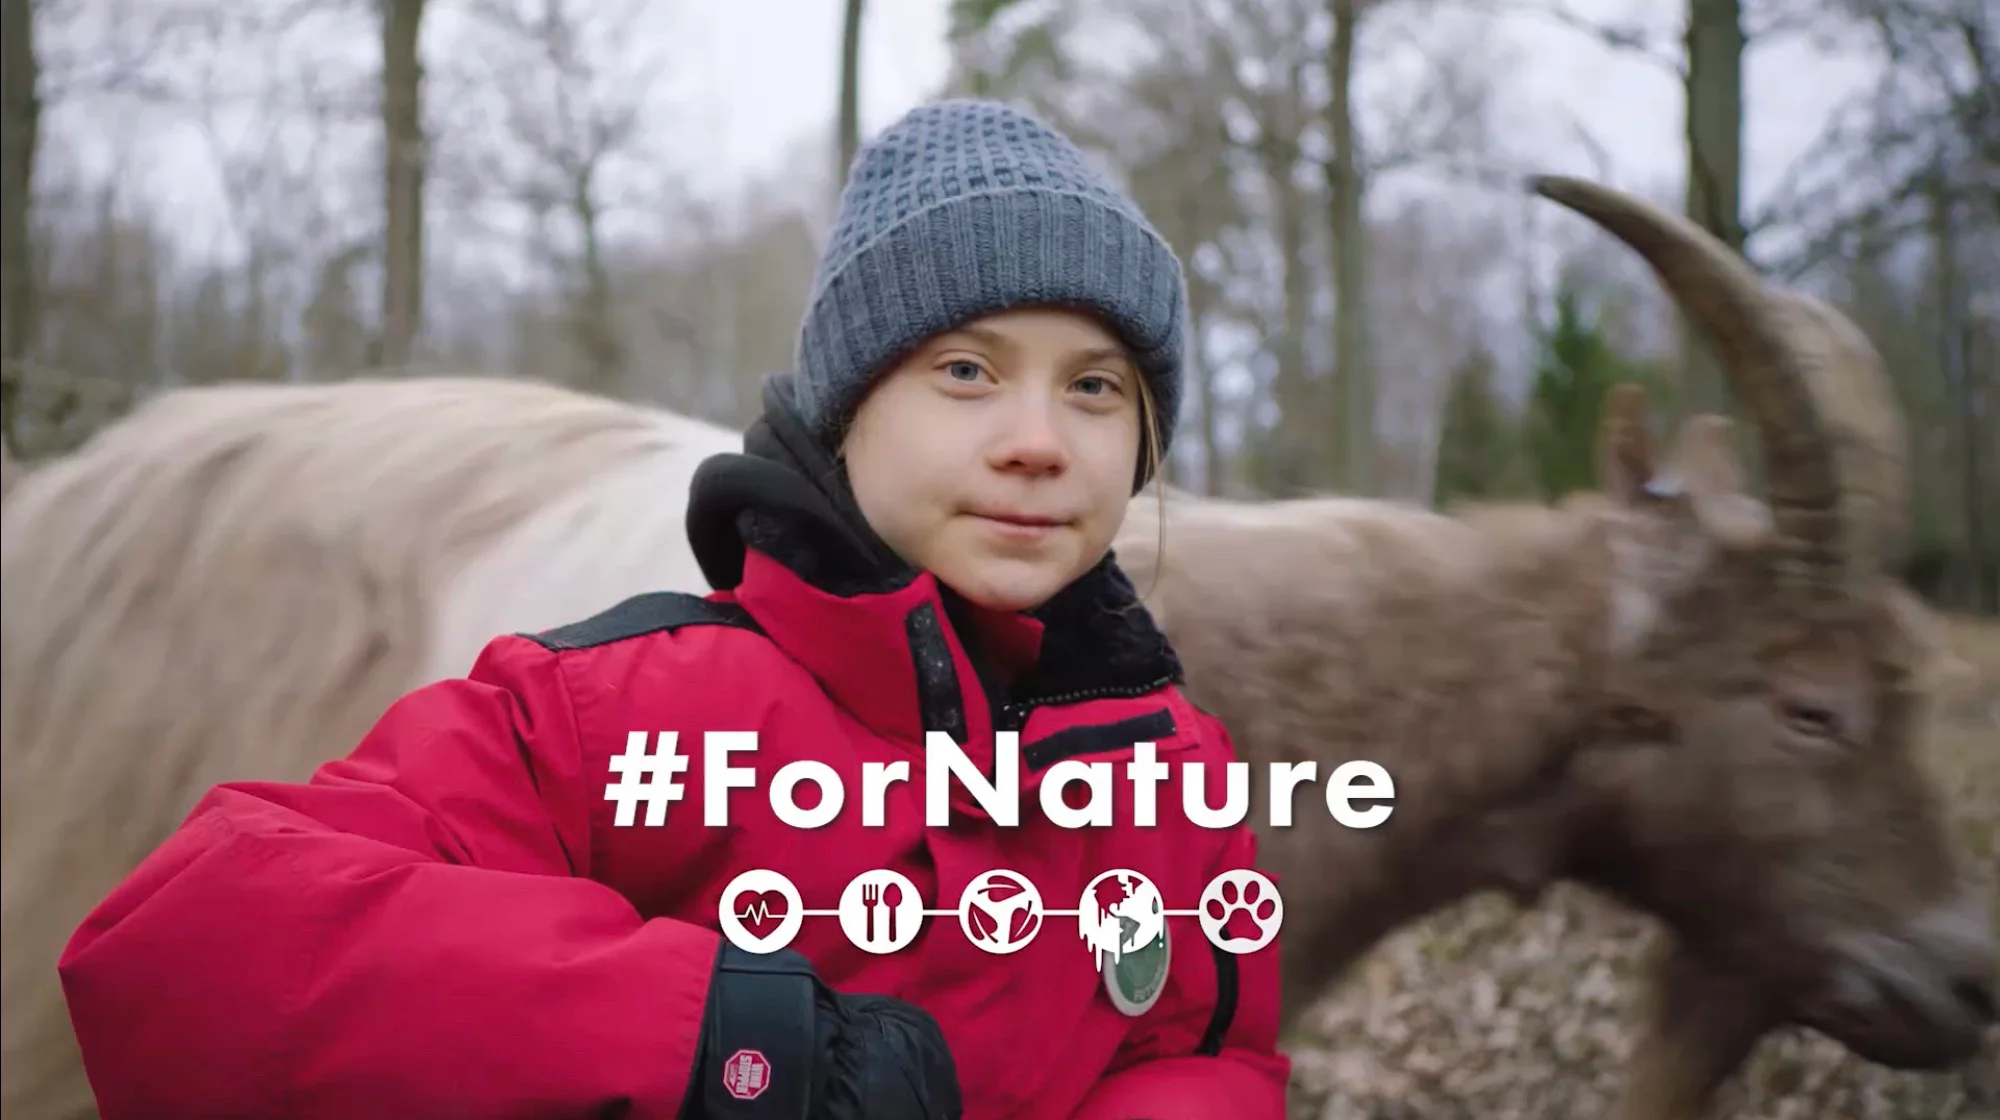 ForNature - A Film By Greta Thunberg on Vimeo